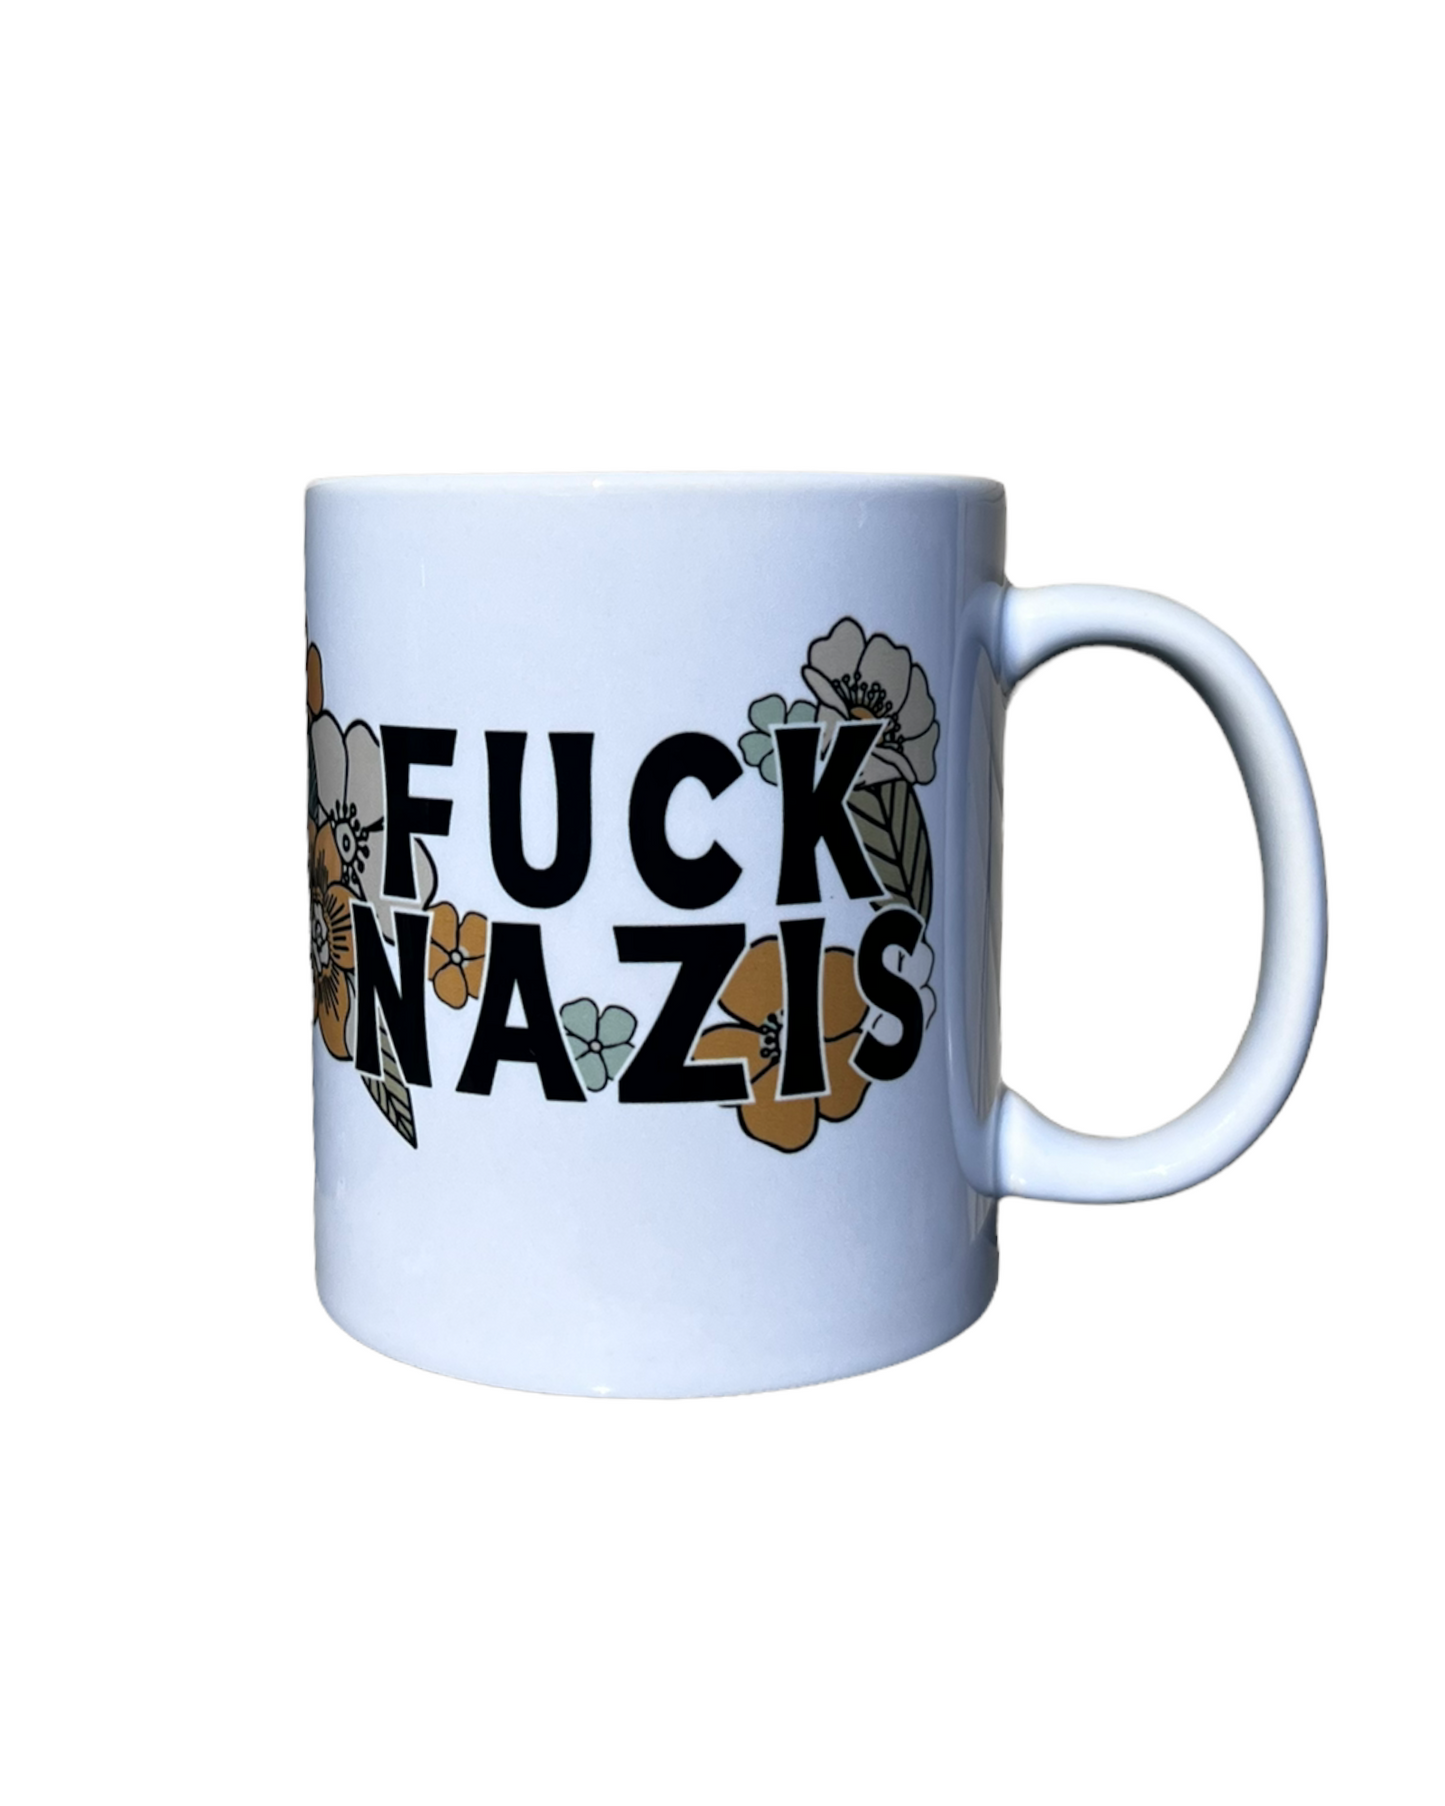 Fuck Nazis Ceramic Mug